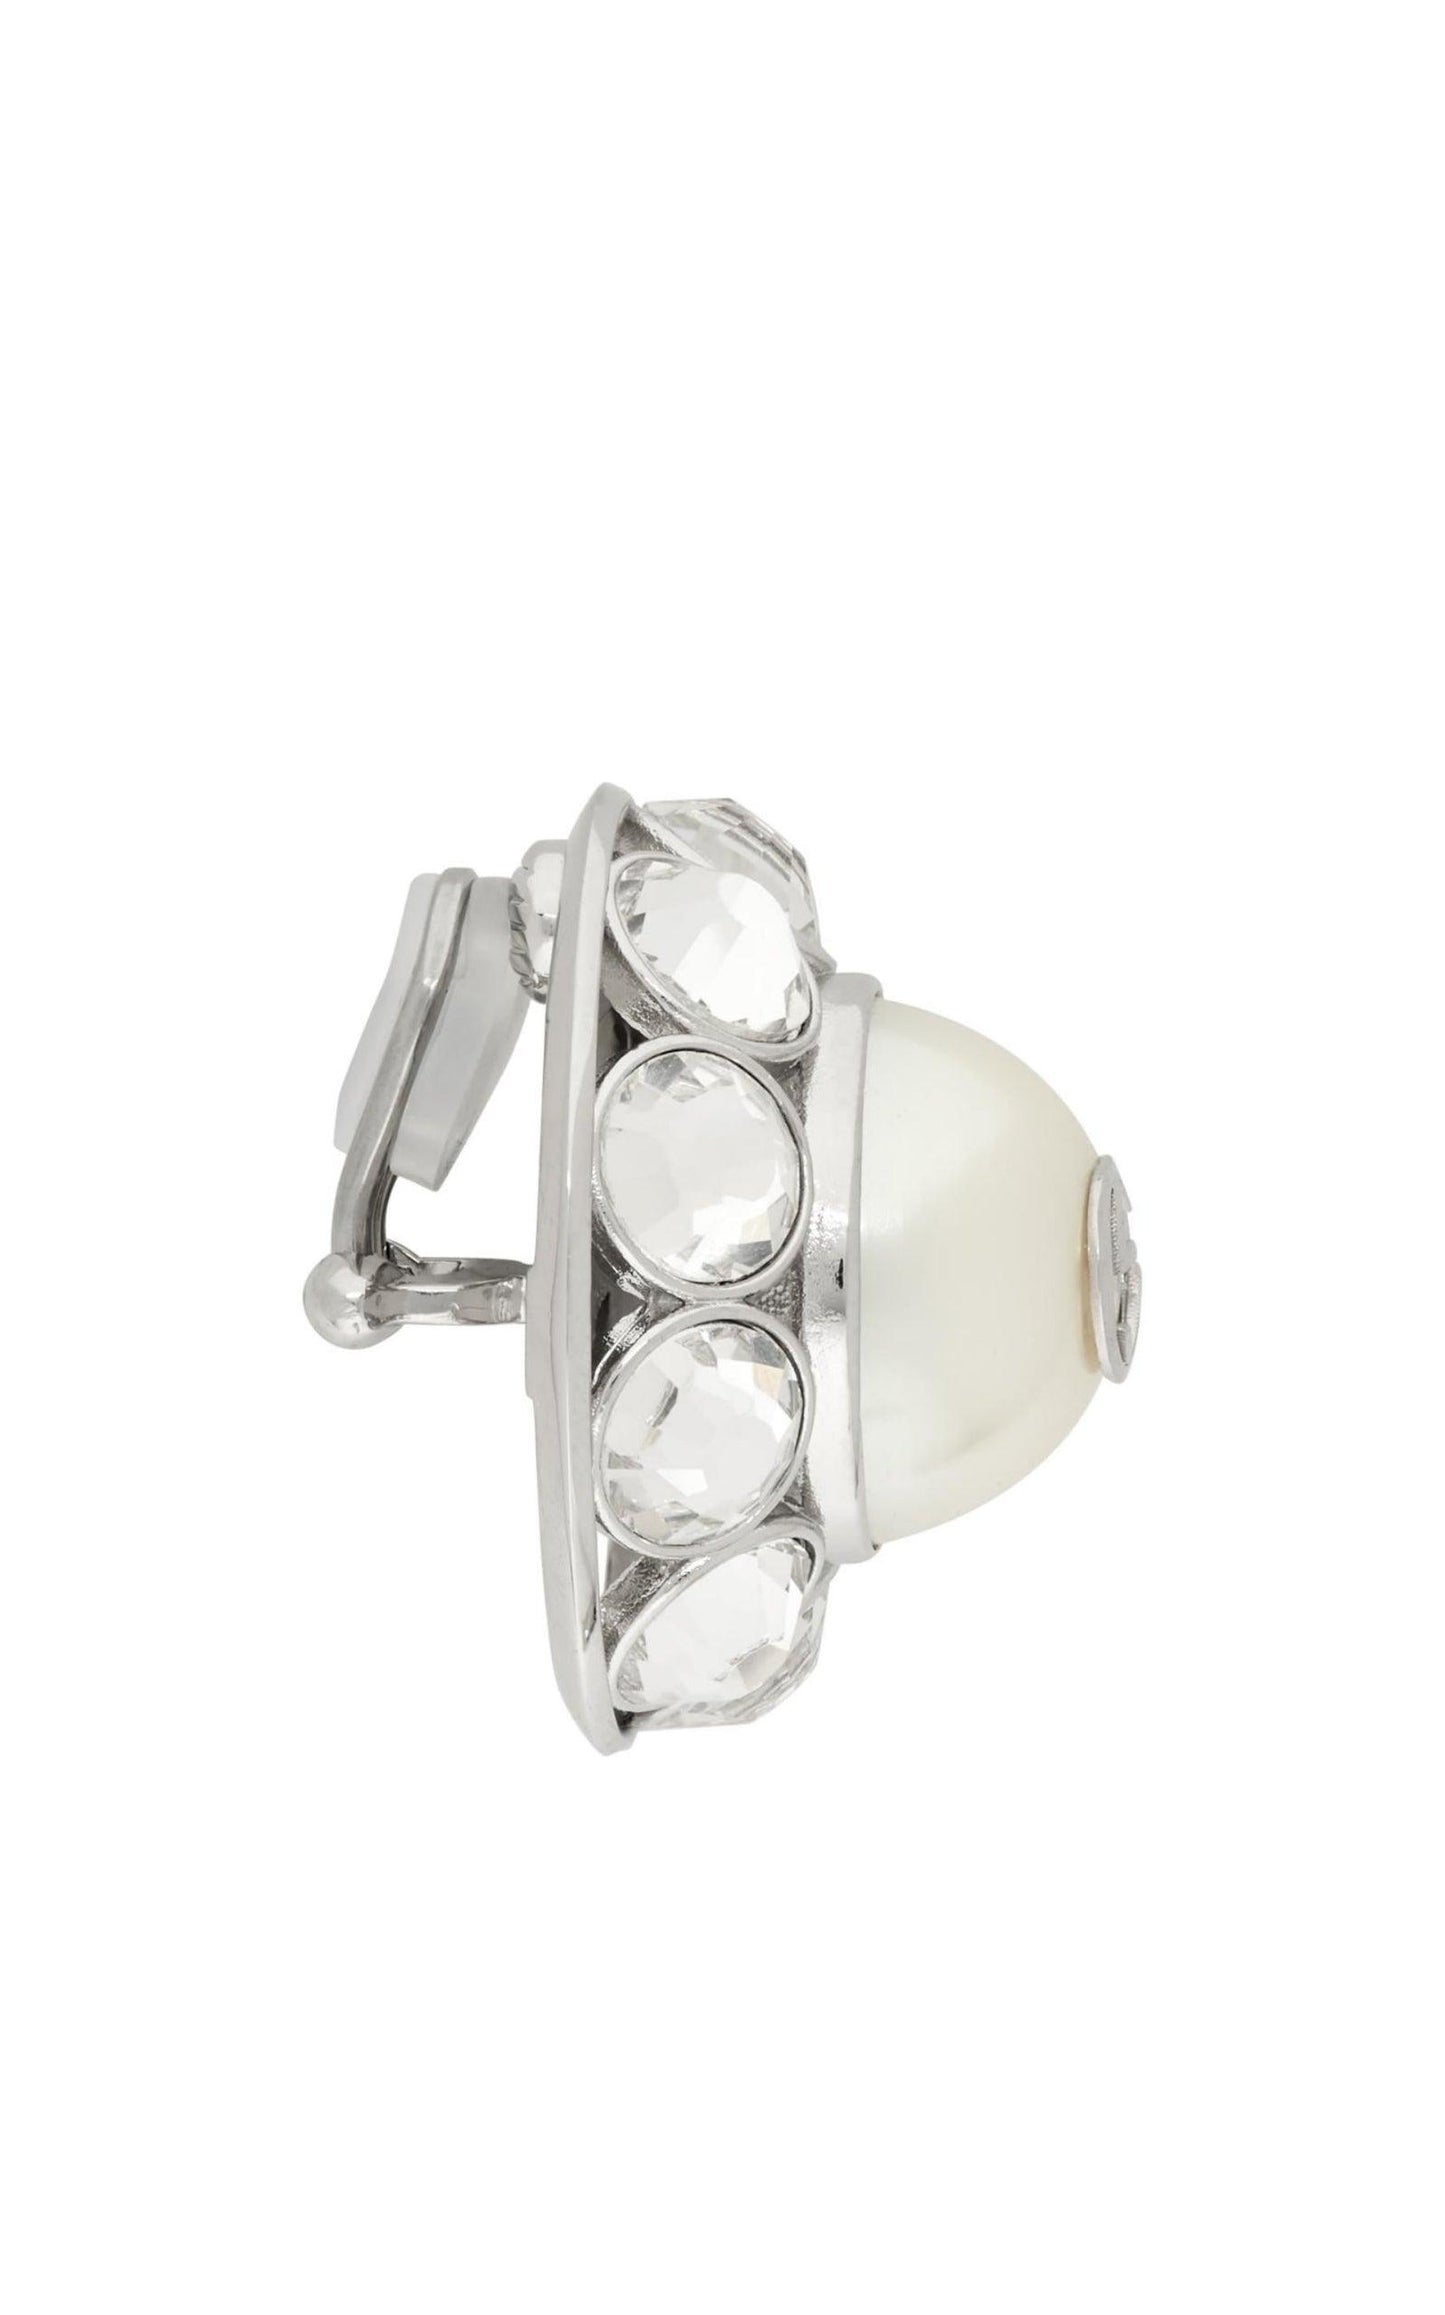  GucciSilver Crystal & Pearl Interlocking G Earrings - Runway Catalog